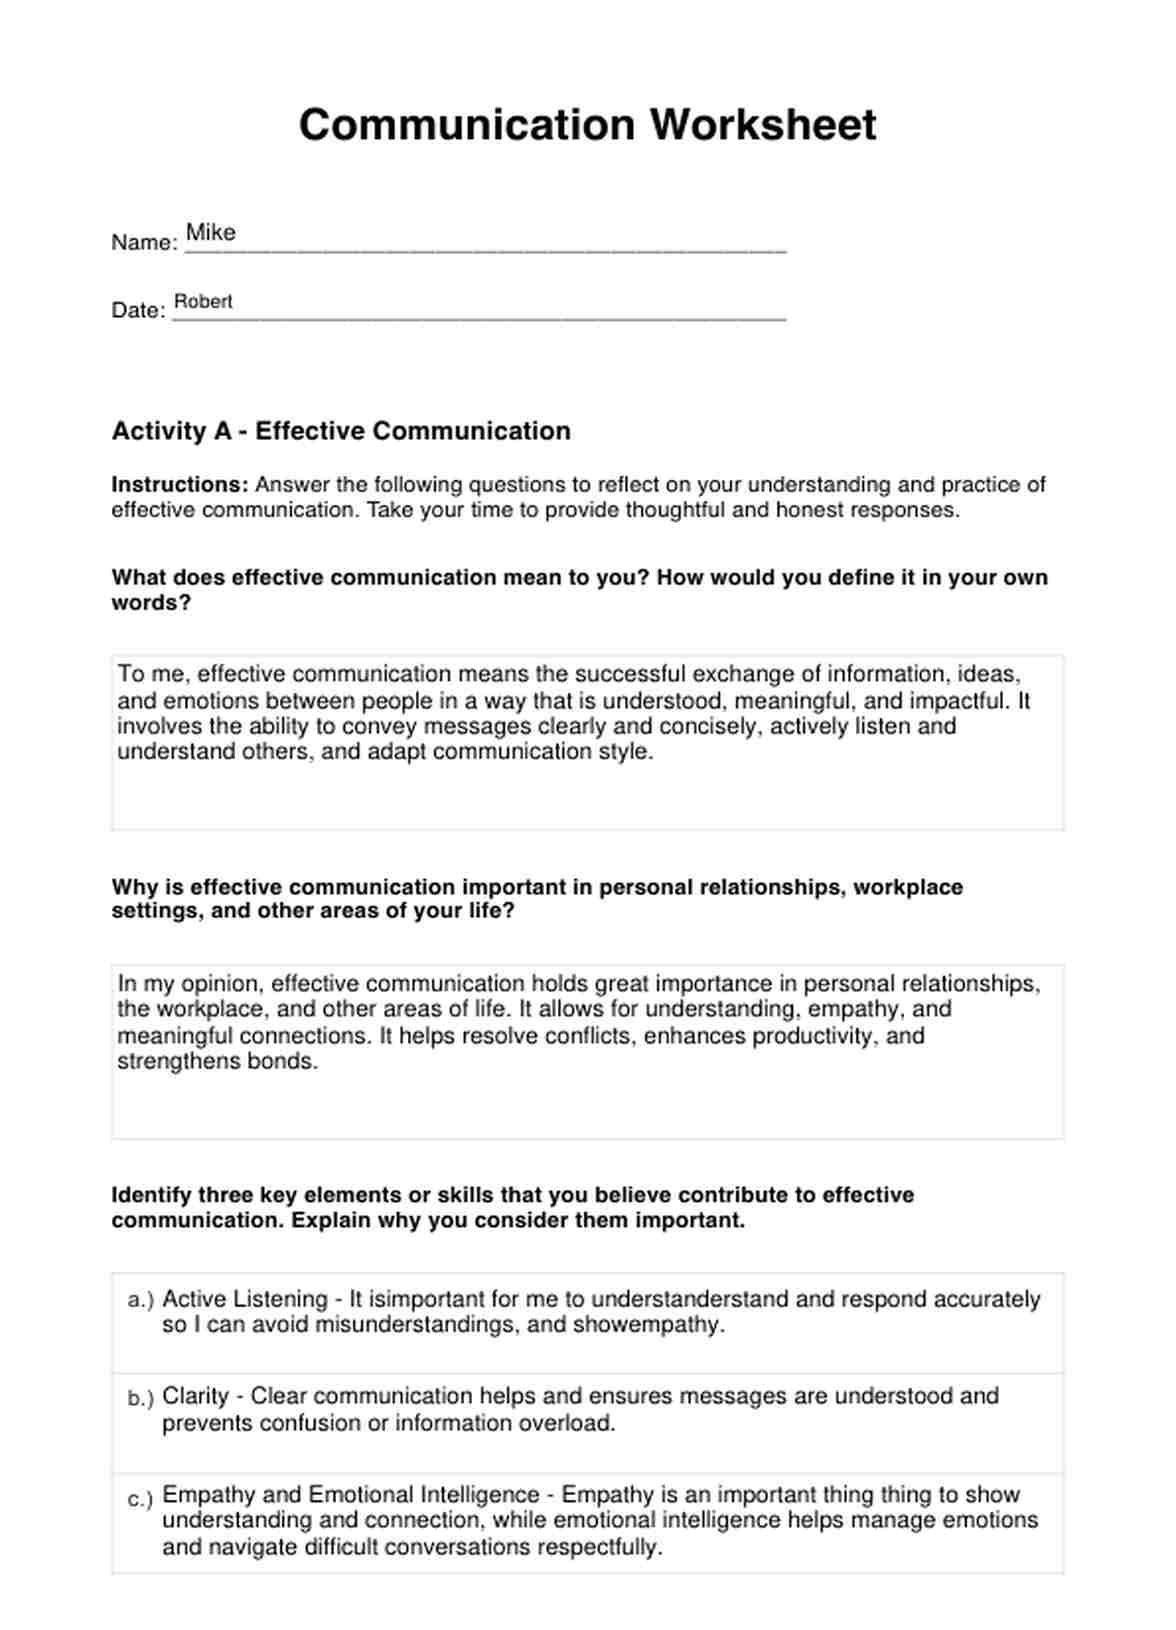 Communication Worksheets PDF Example